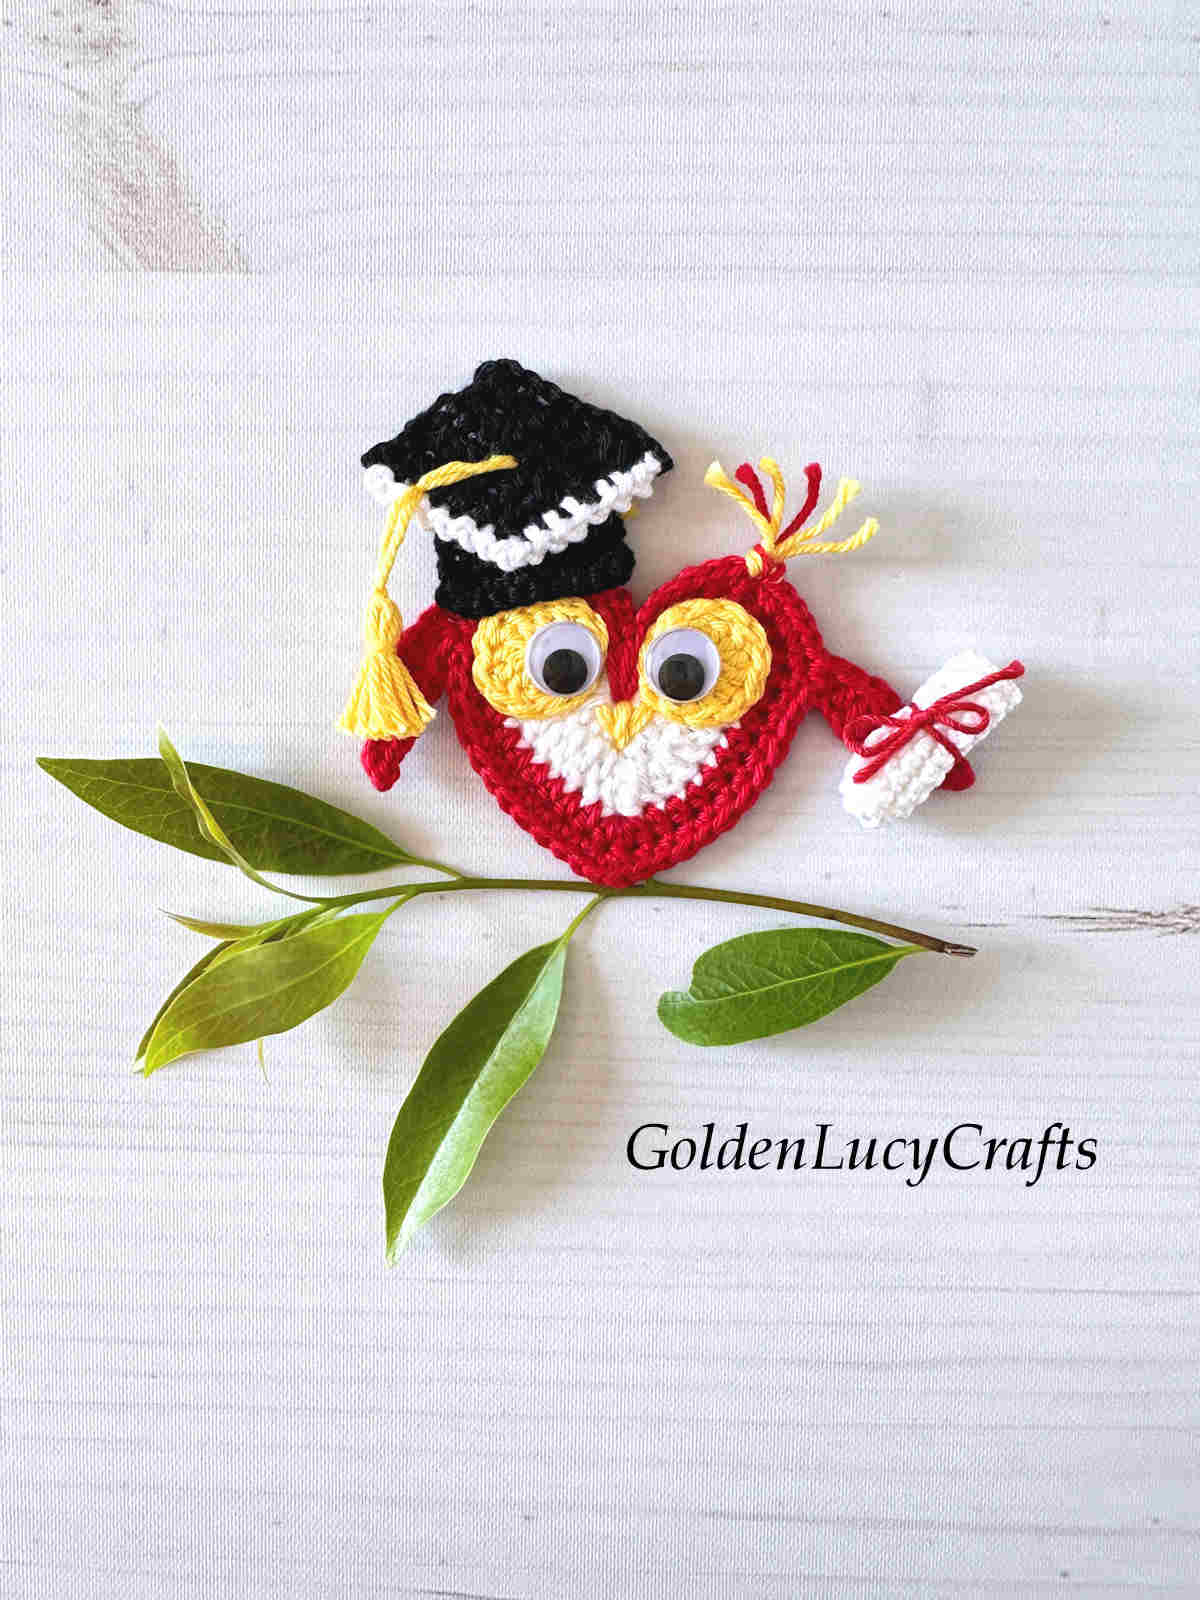 Crochet applique owl in graduation cap holding diploma.